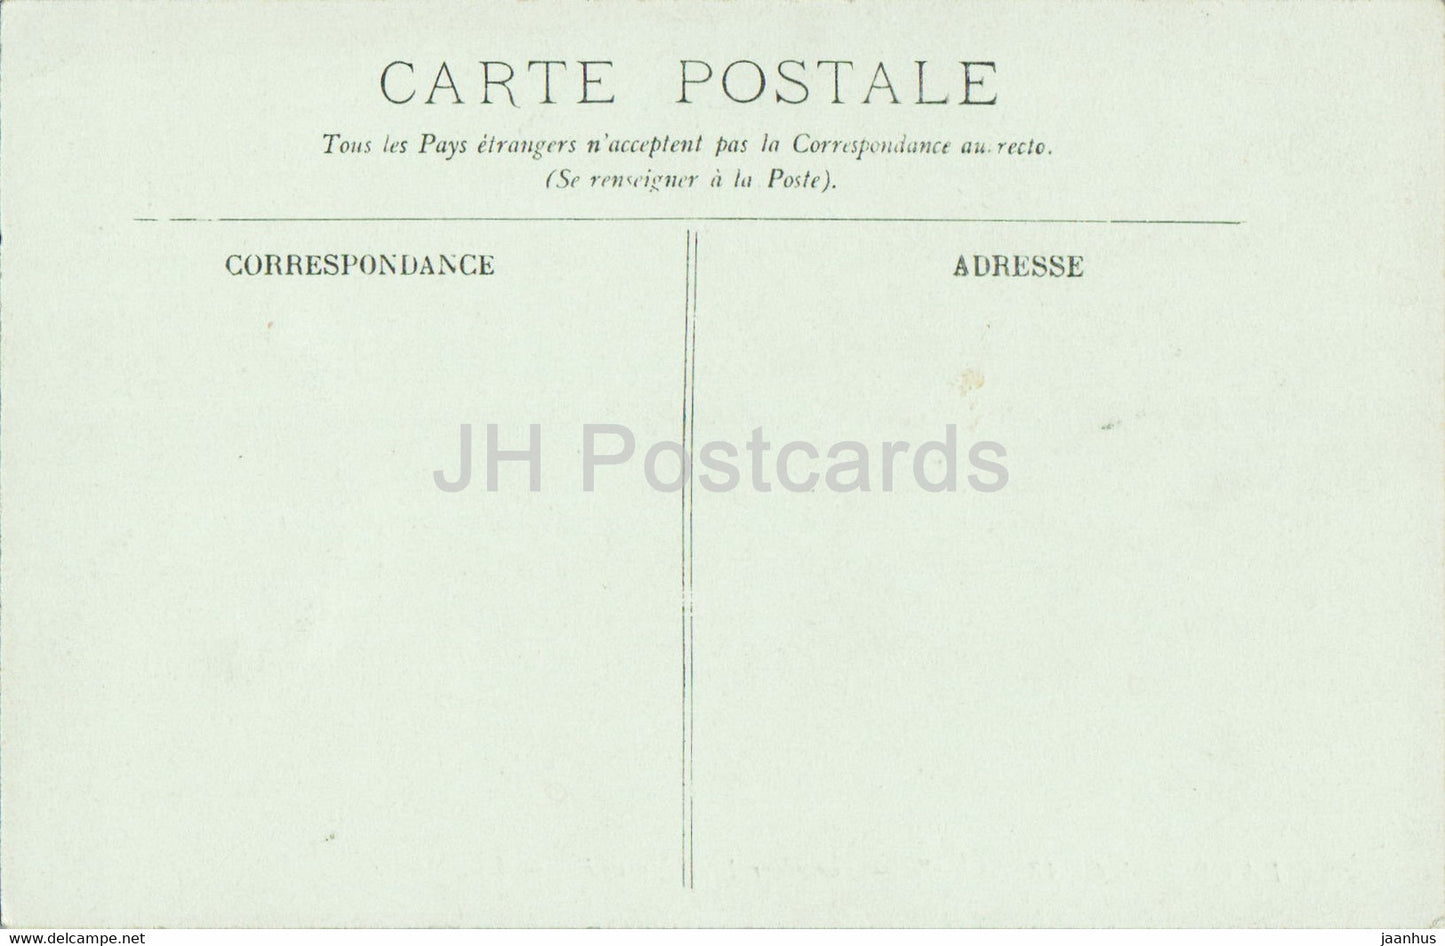 La Grande Chartreuse - Vue Generale du Monastere - 166 - old postcard - France - unused